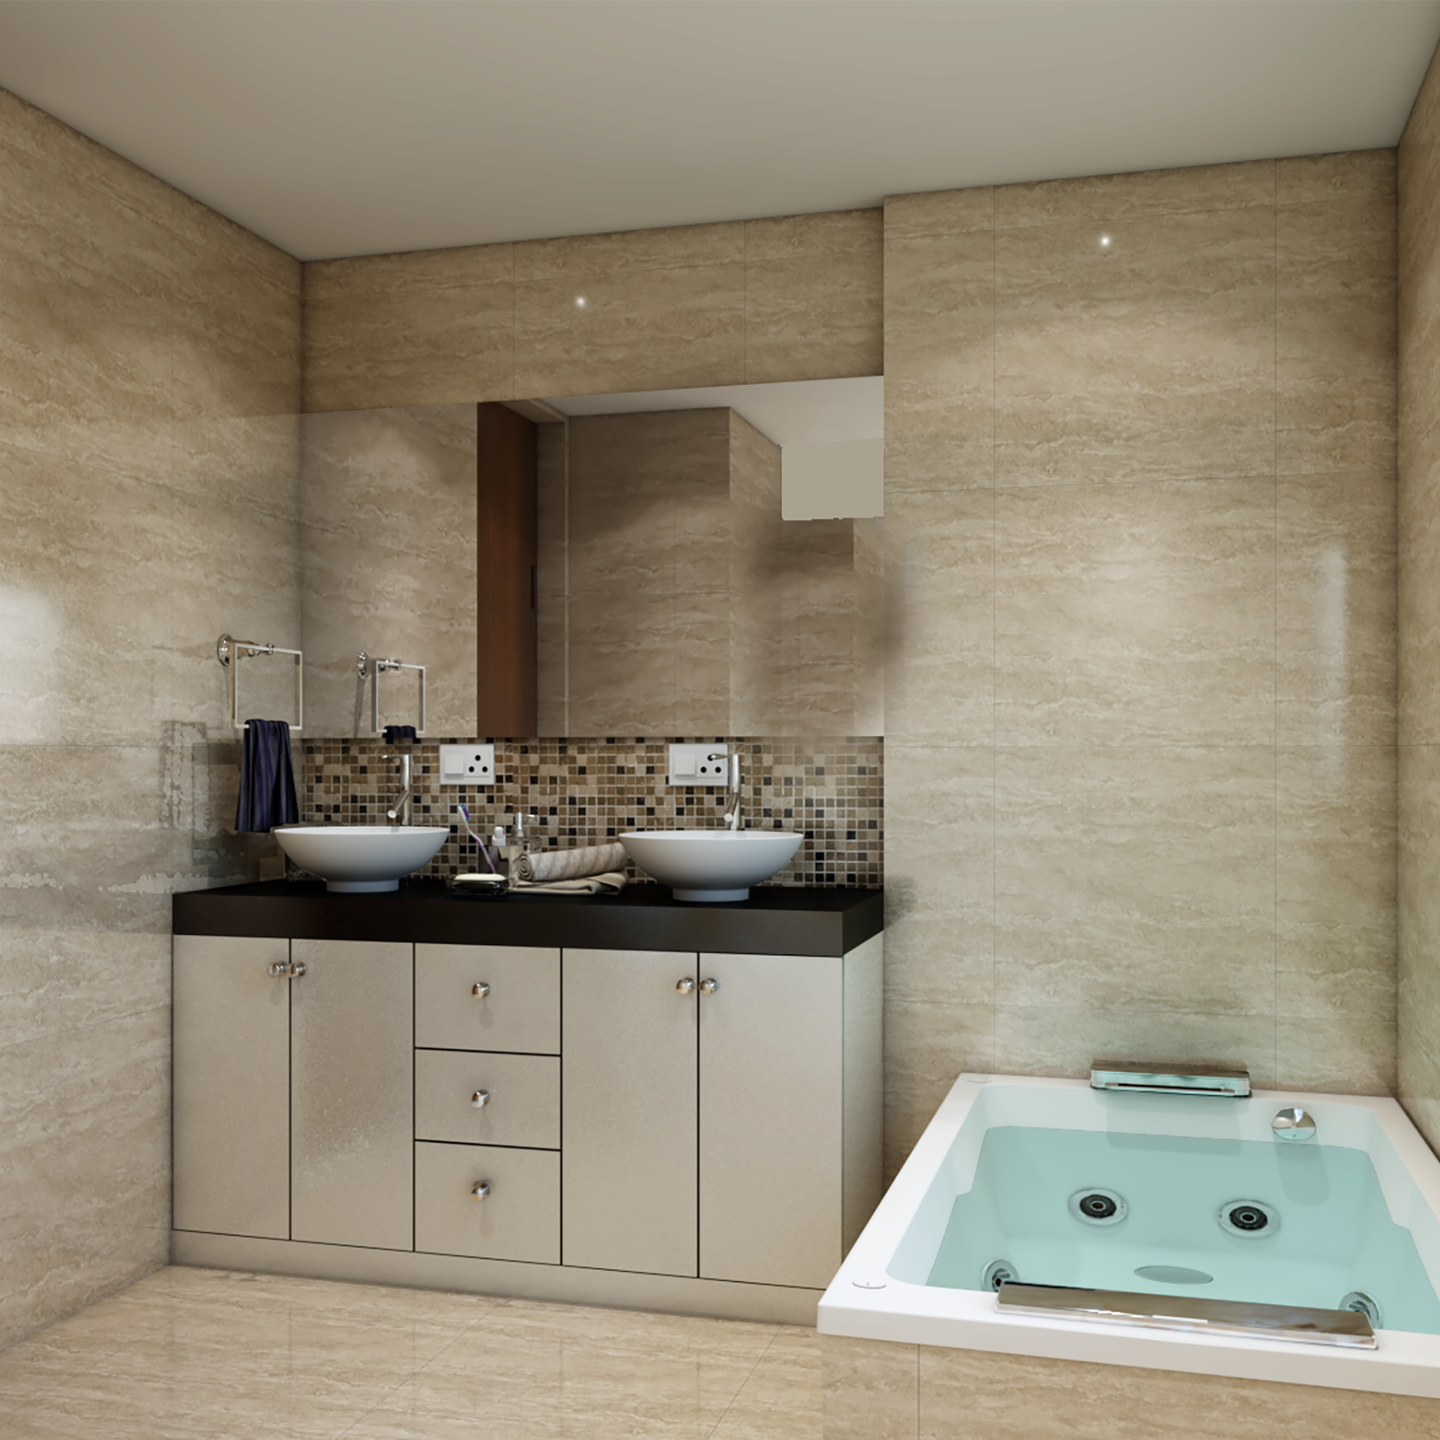 Subtle & Classy Washroom With Contemporary Interiors & Huge Bathtub - Livspace